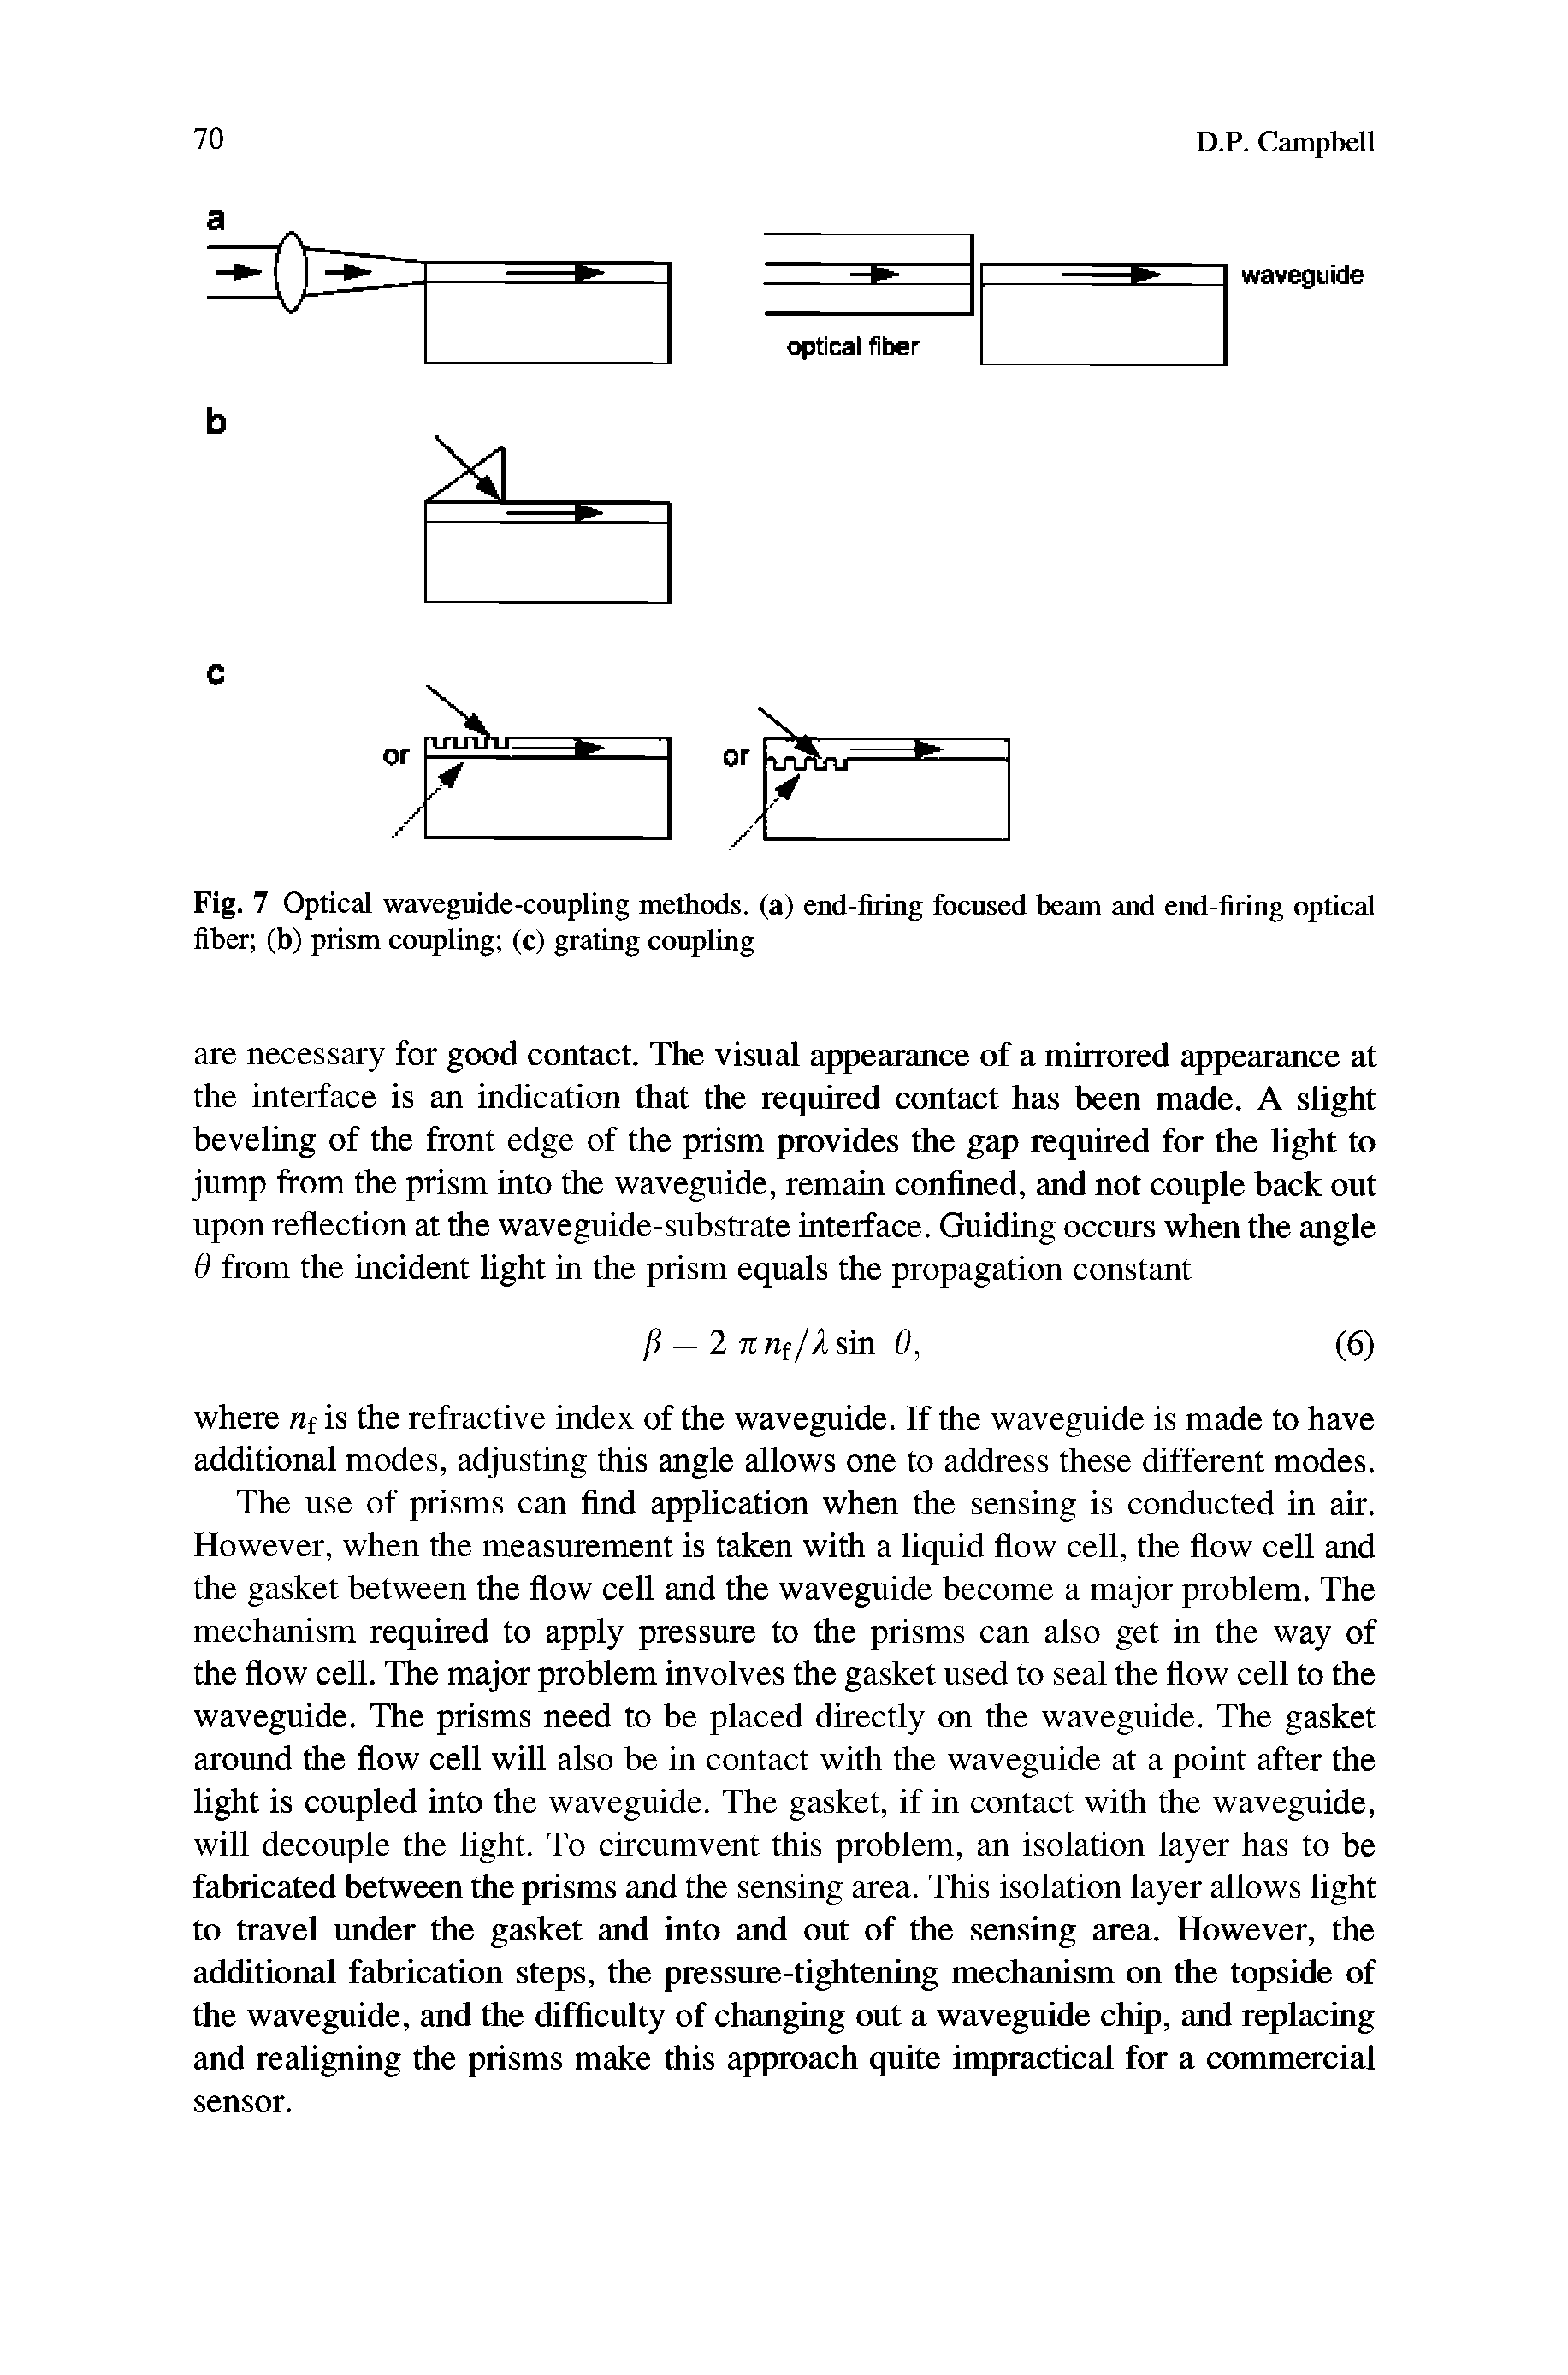 Fig. 7 Optical waveguide-coupling methods, (a) end-firing focused beam and end-firing optical fiber (b) prism coupling (c) grating coupling...